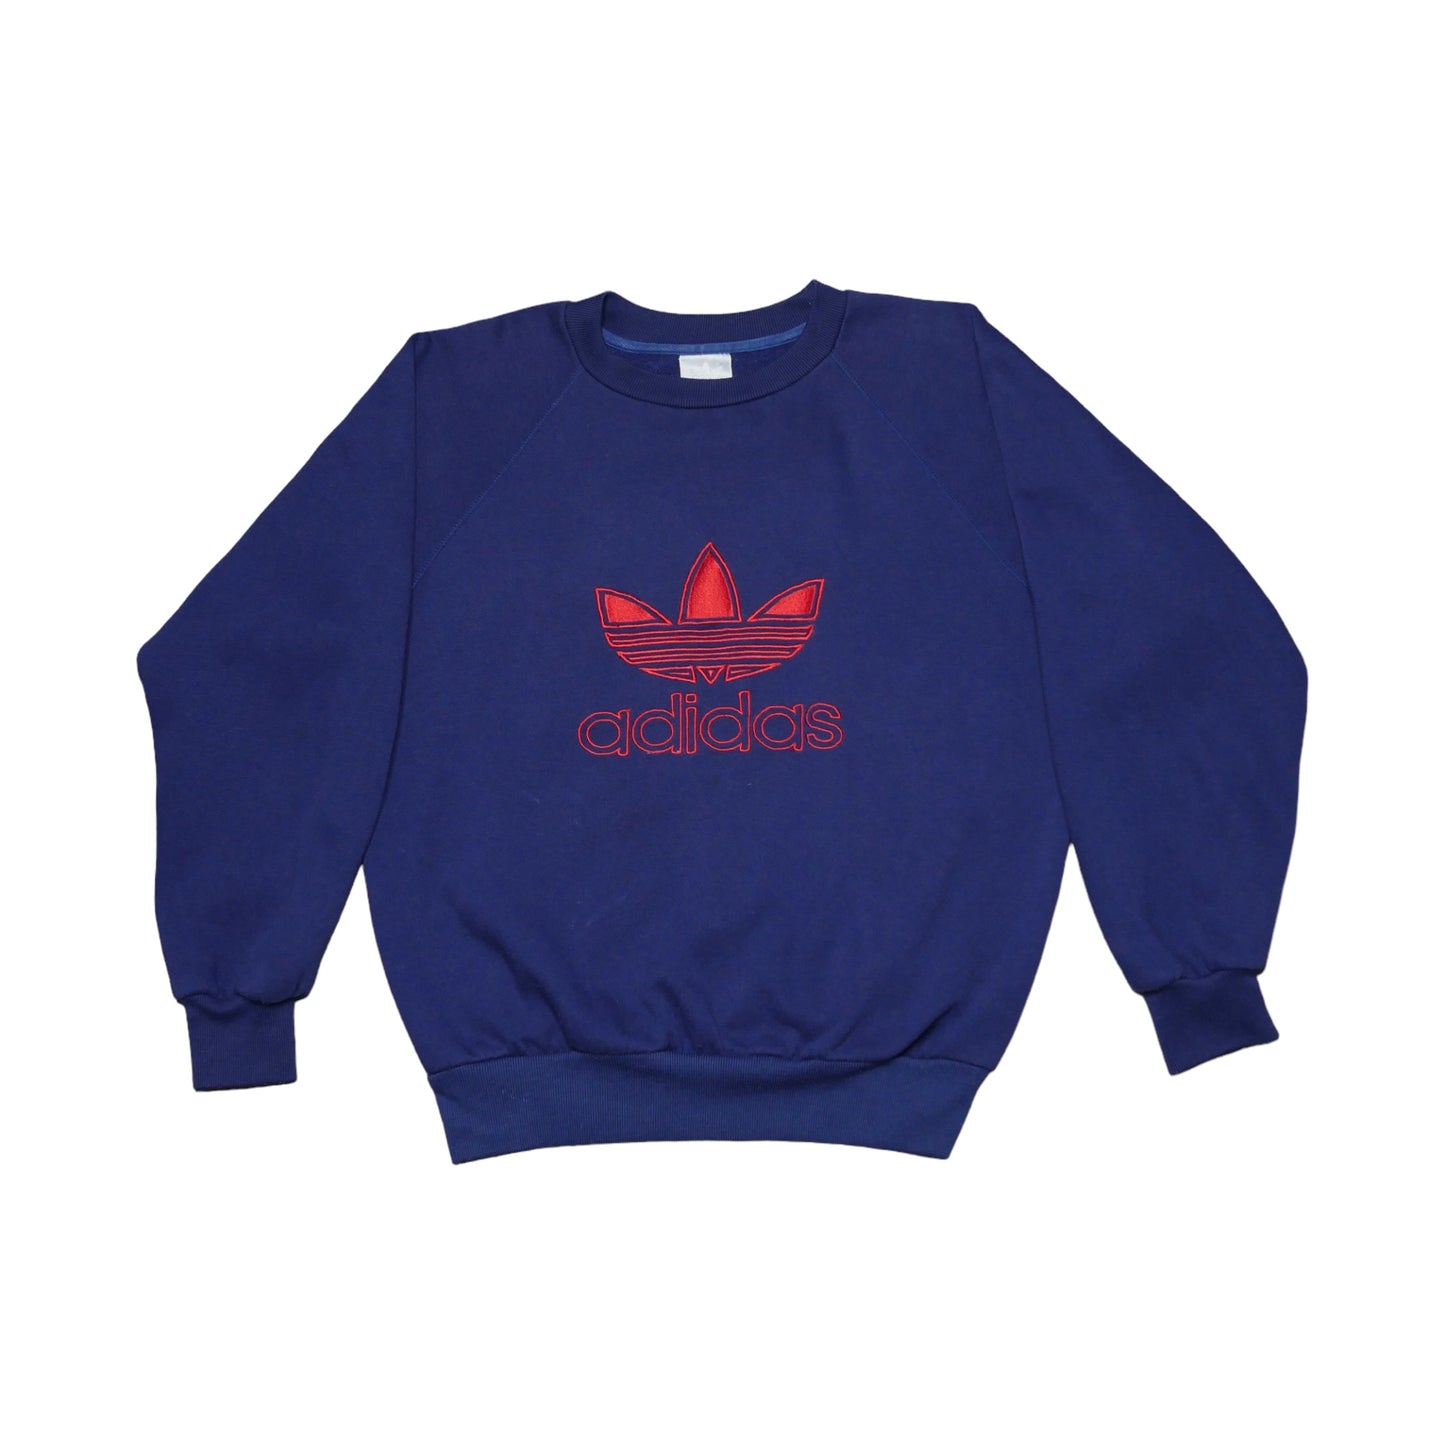 Adidas Trefoil Crewneck Sweatshirt - Small